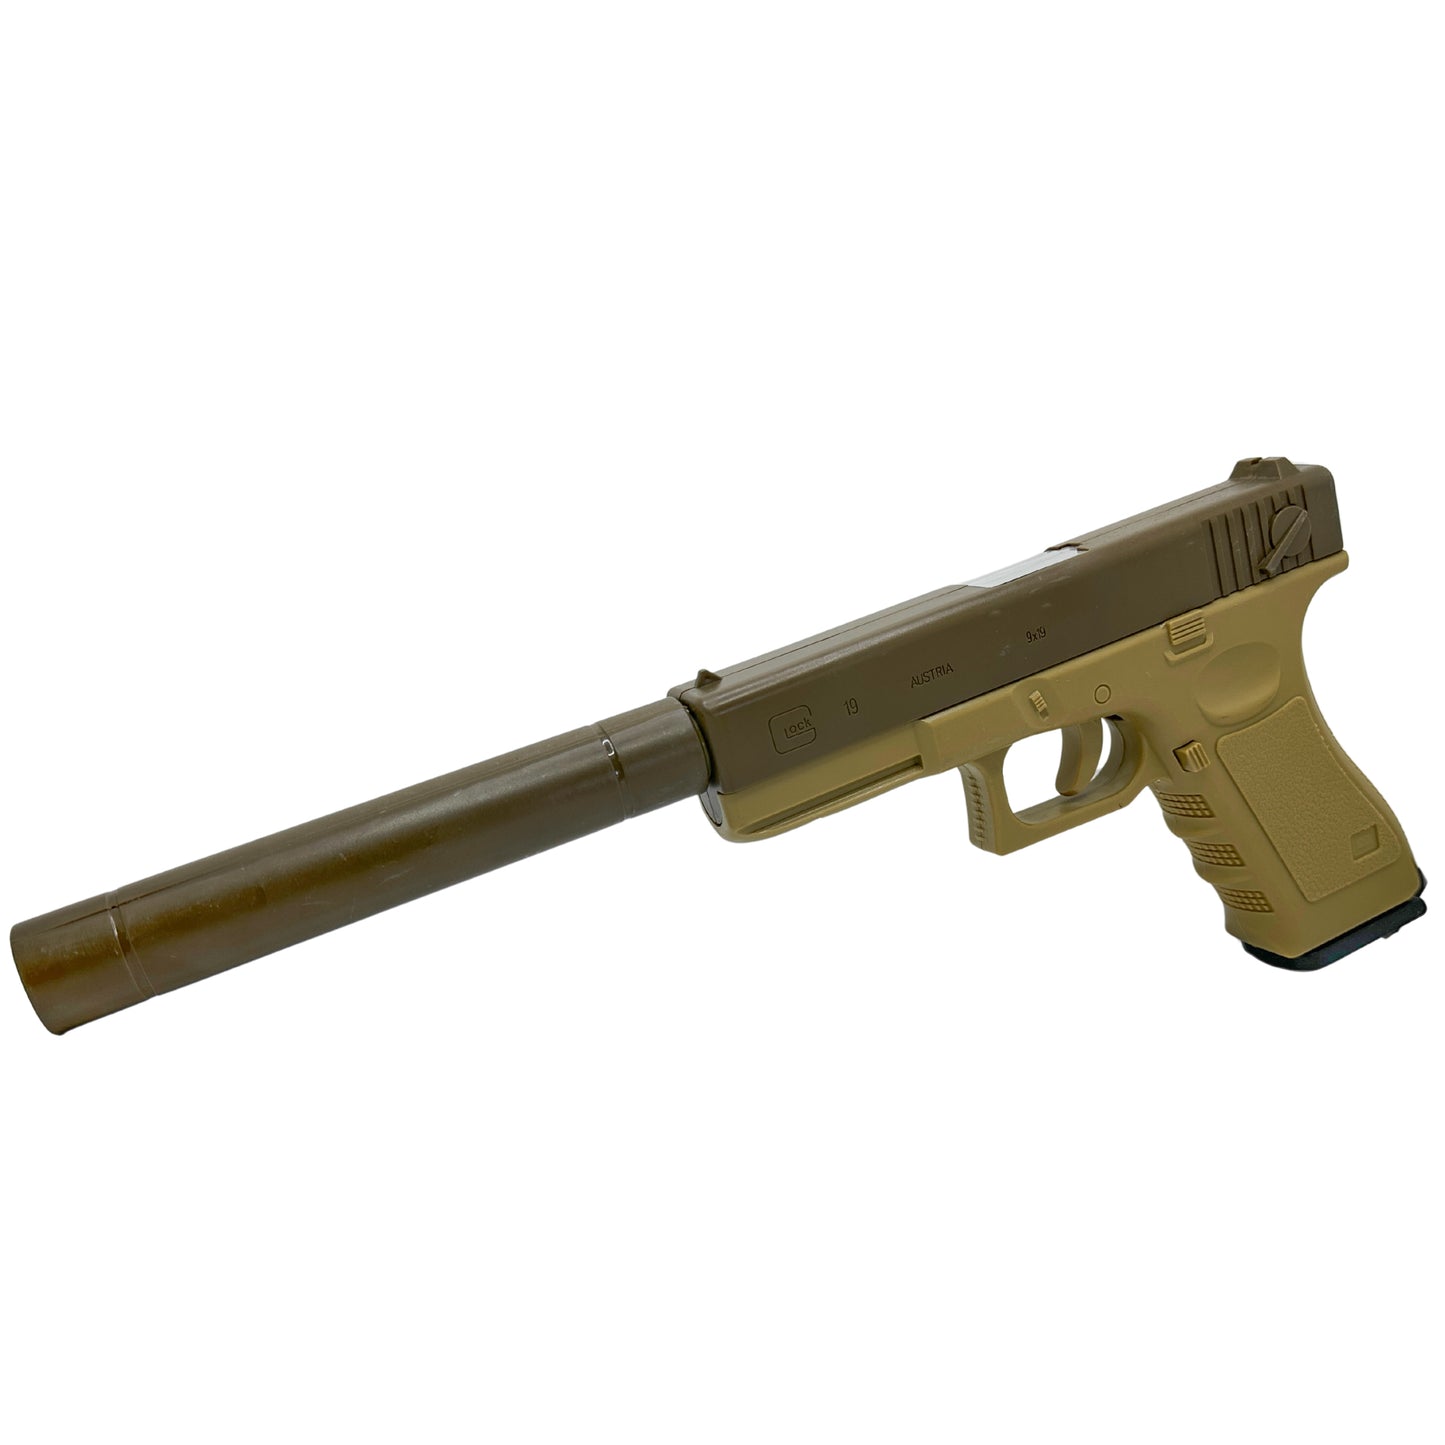 CG Manual G-Series Pistol - Gel Blaster